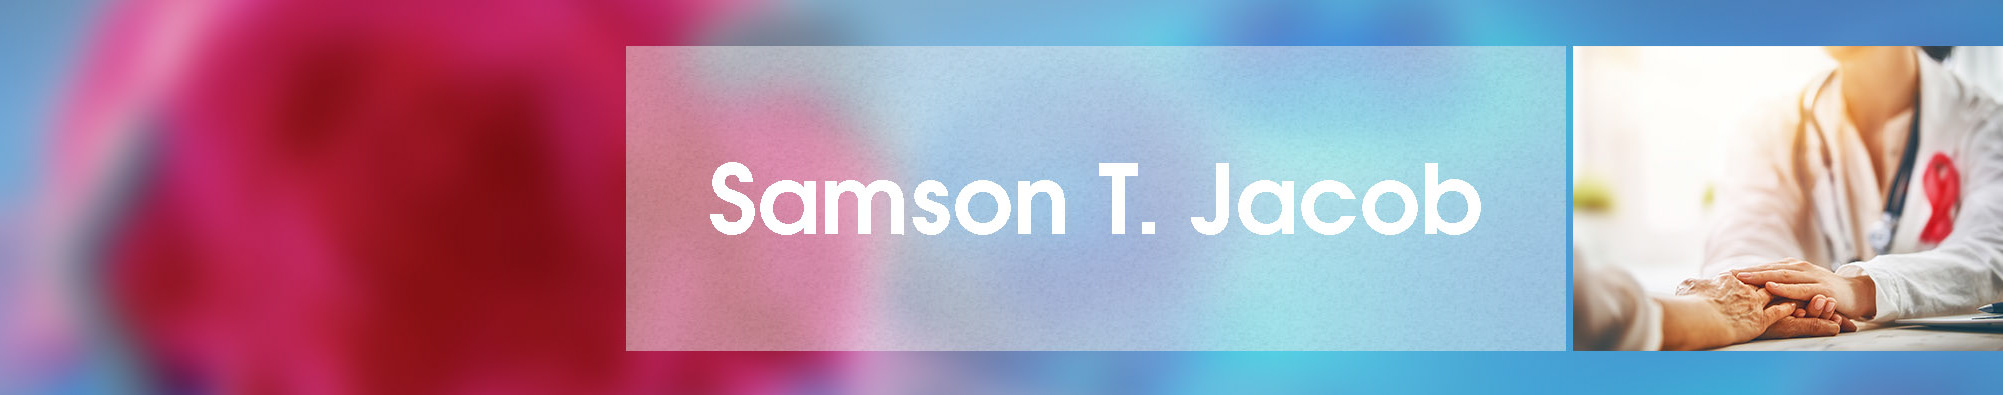 Samson T. Jacob's profile banner